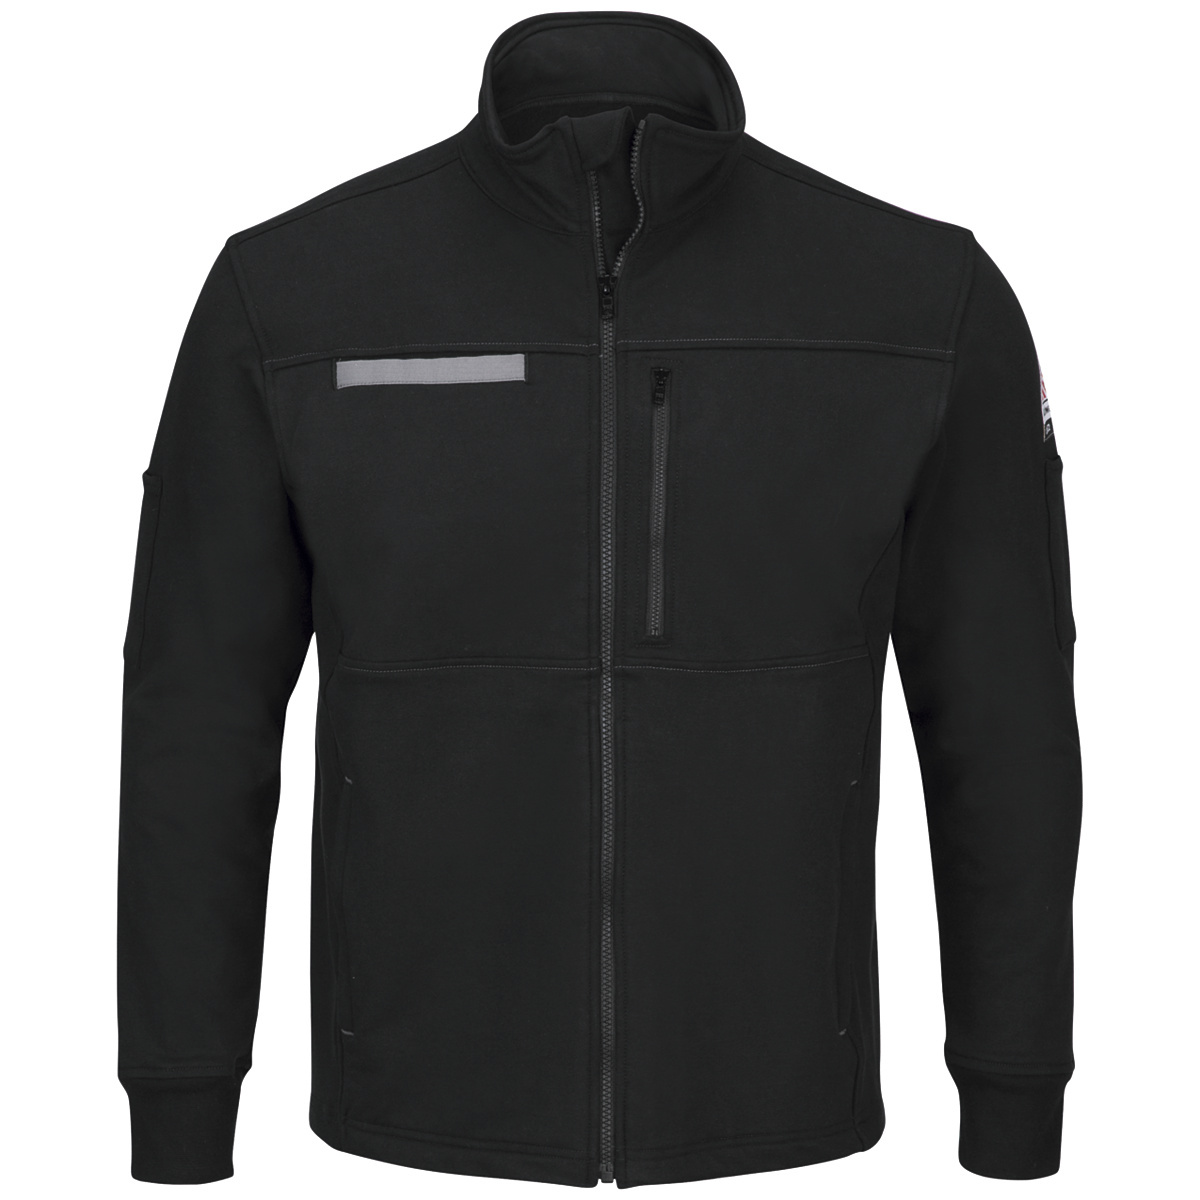 Bulwark® X-Large Regular Black Cotton/Spandex Flame Resistant Jacket With Zipper Front Closure